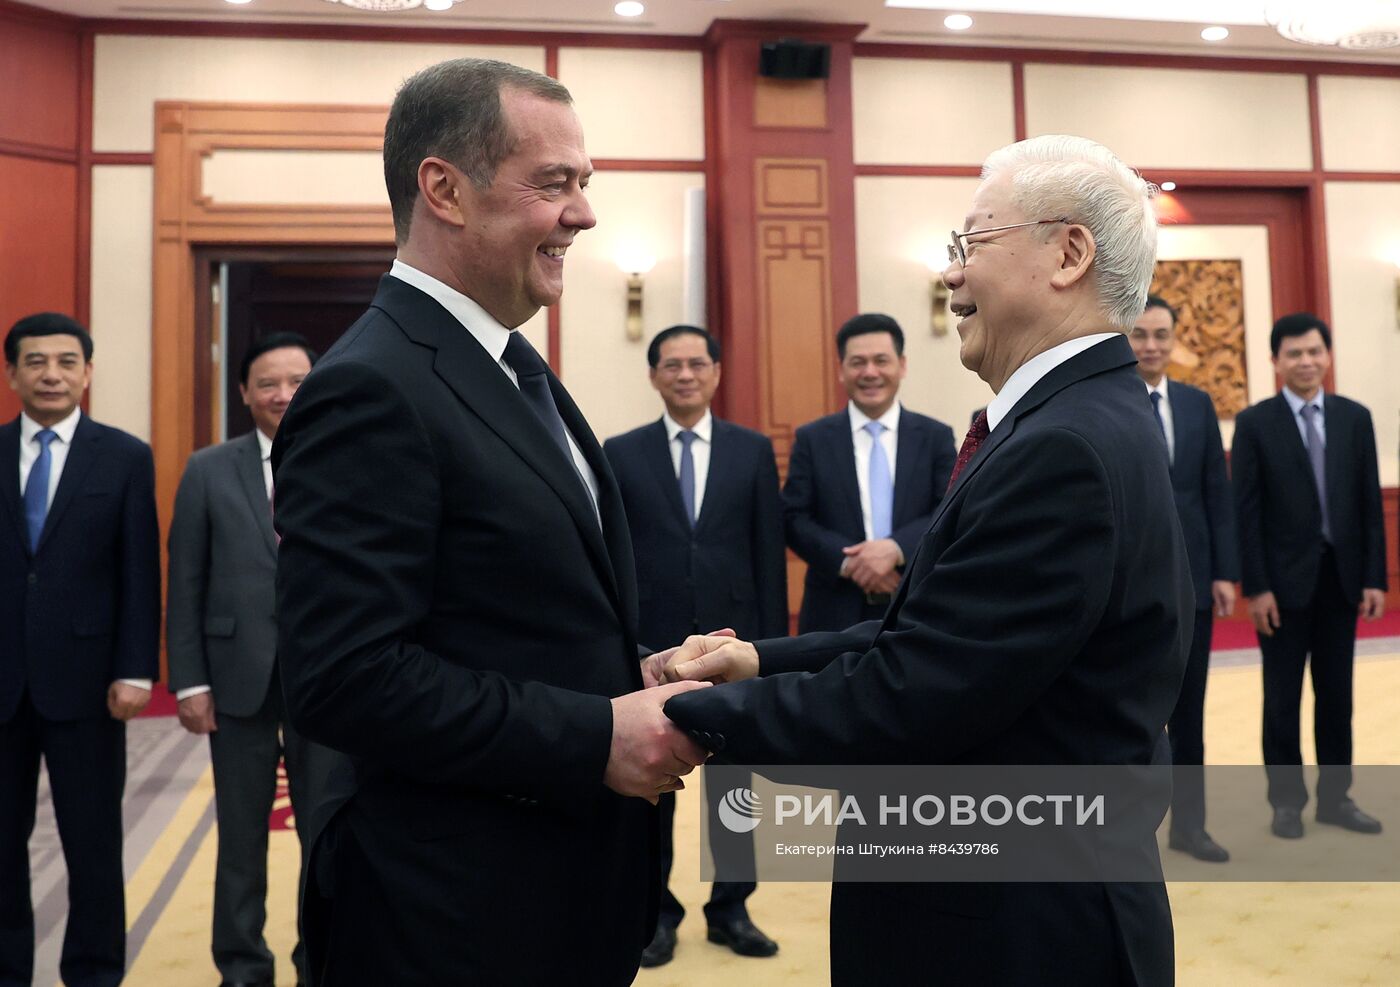 Визит зампреда Совбеза РФ, главы "Единой России" Д. Медведева во Вьетнам